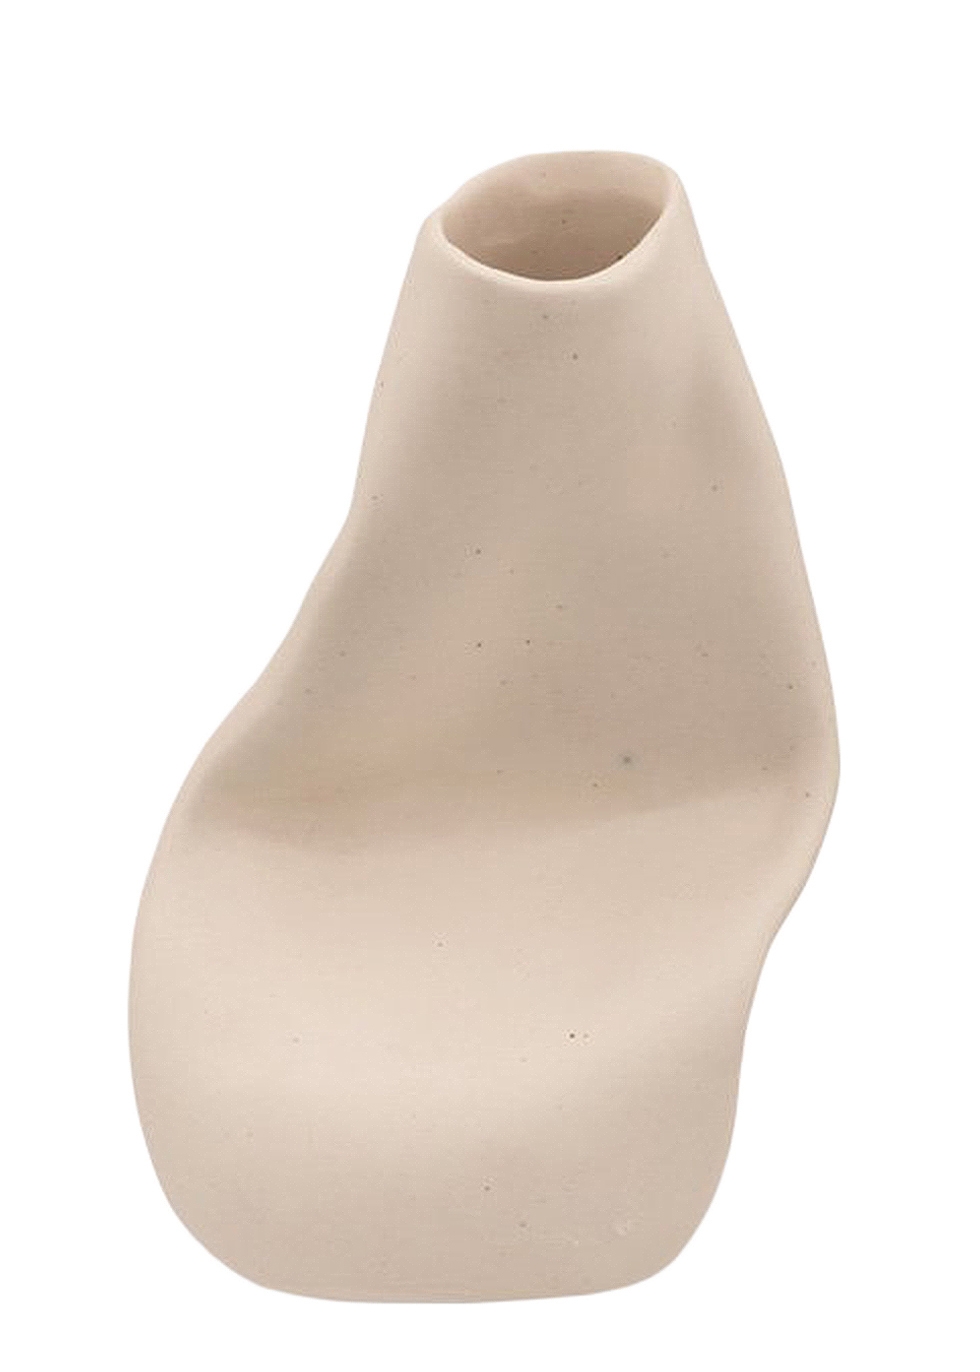 Completedworks X Ekaterina Bazhenova Yamasaki Solitude small vase